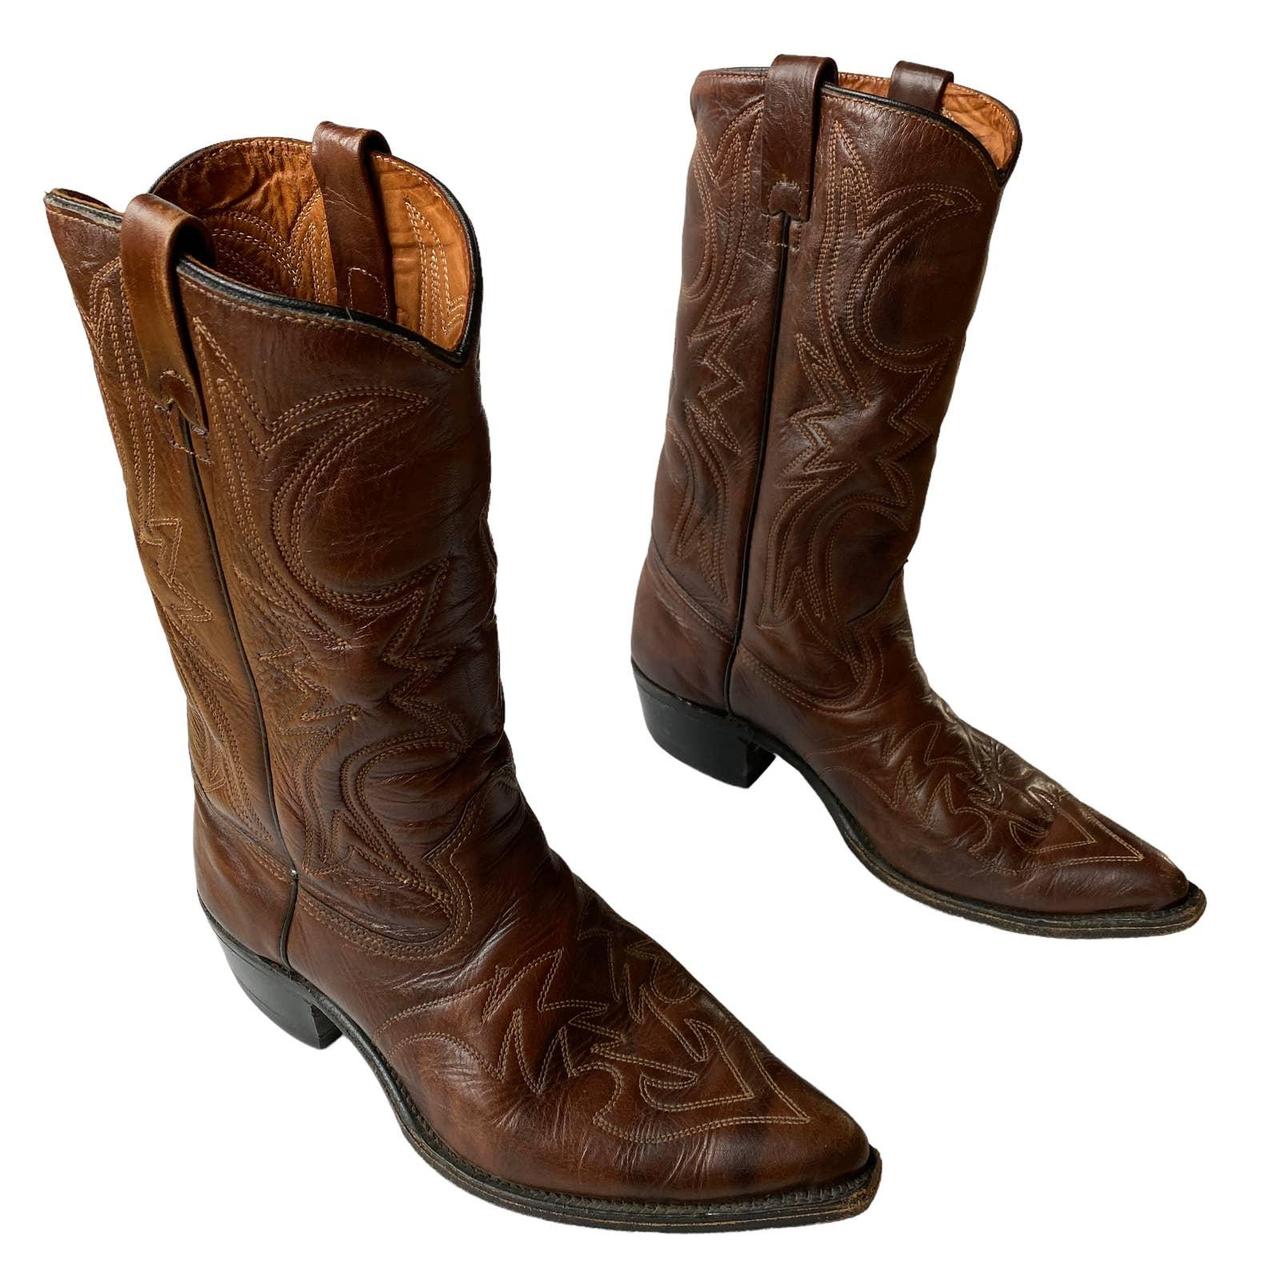 Vintage Cowboy Boots Sears Brown Leather Western... - Depop